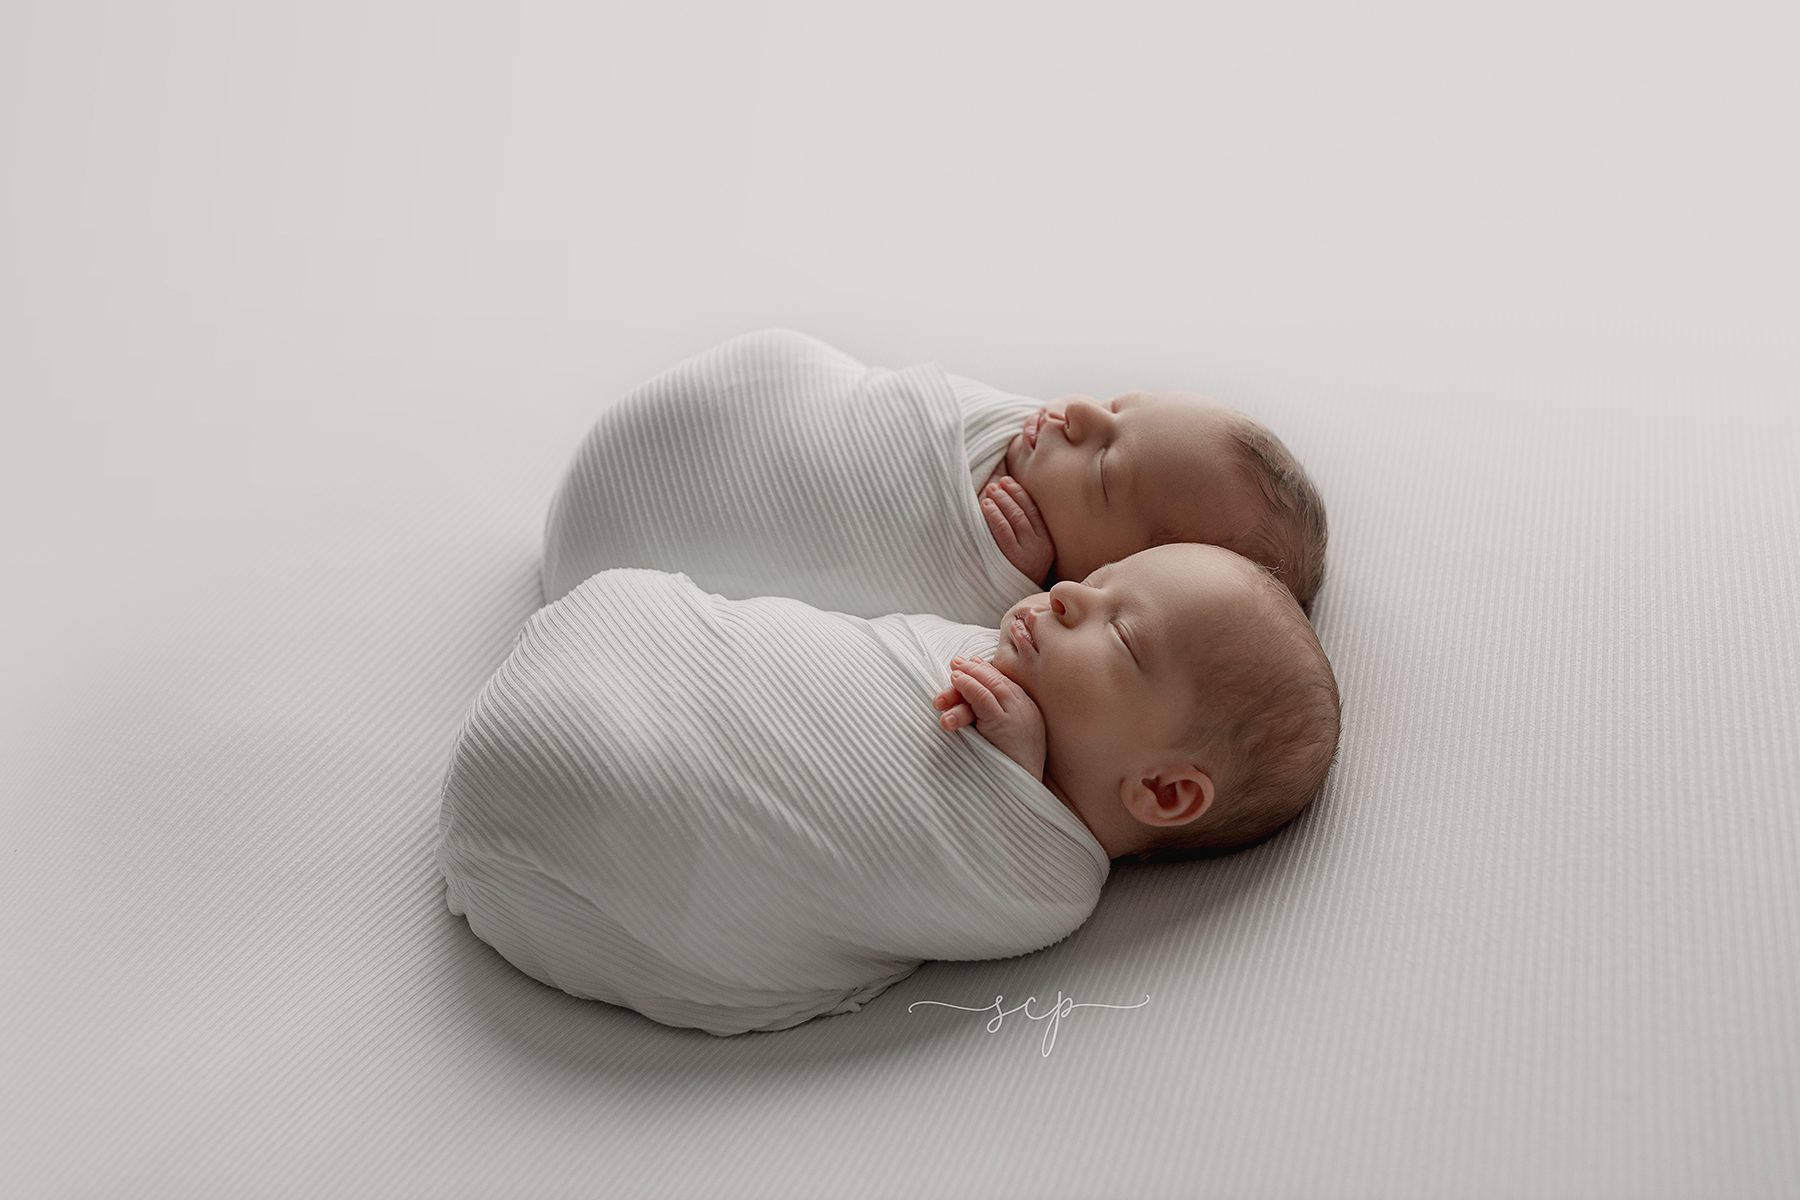 knoxville newborn twins